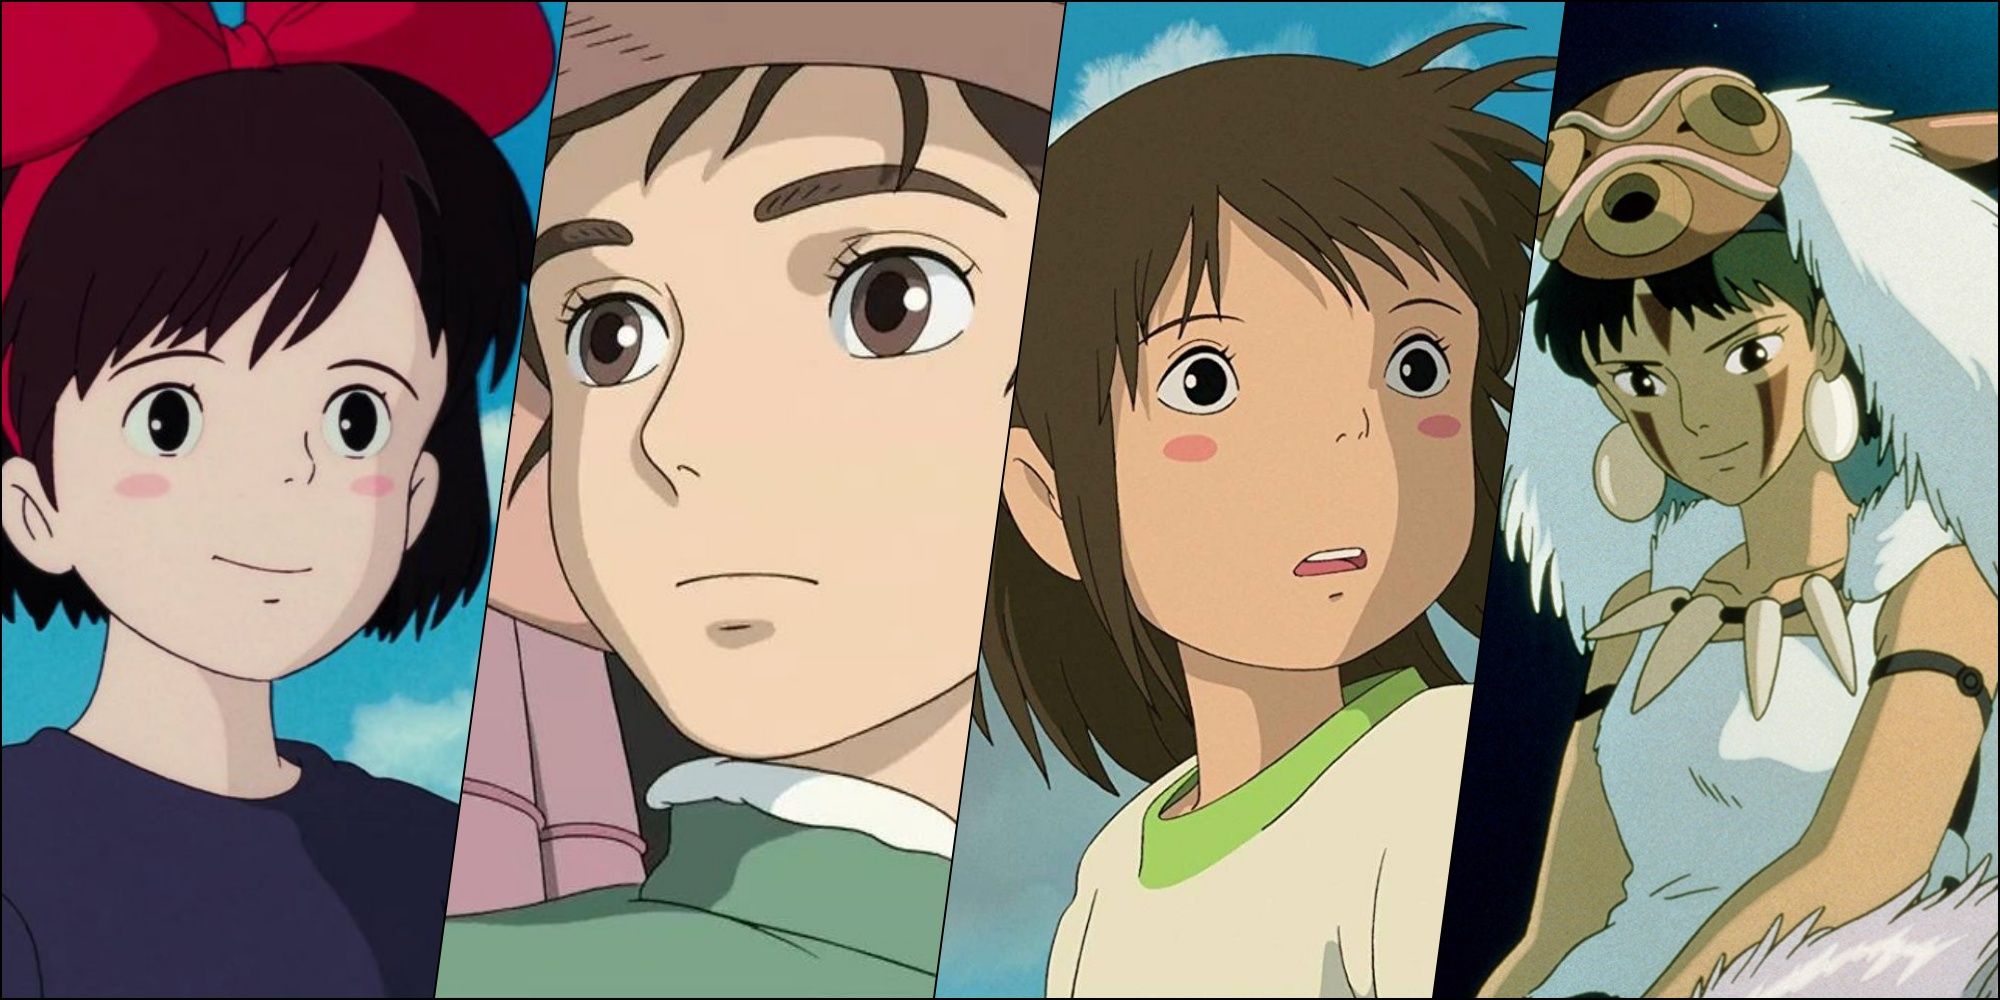 10-Reasons-Why-Hayao-Miyazaki-Films-Are-Works-of-Feminist-Art-Feature-Image.jpg